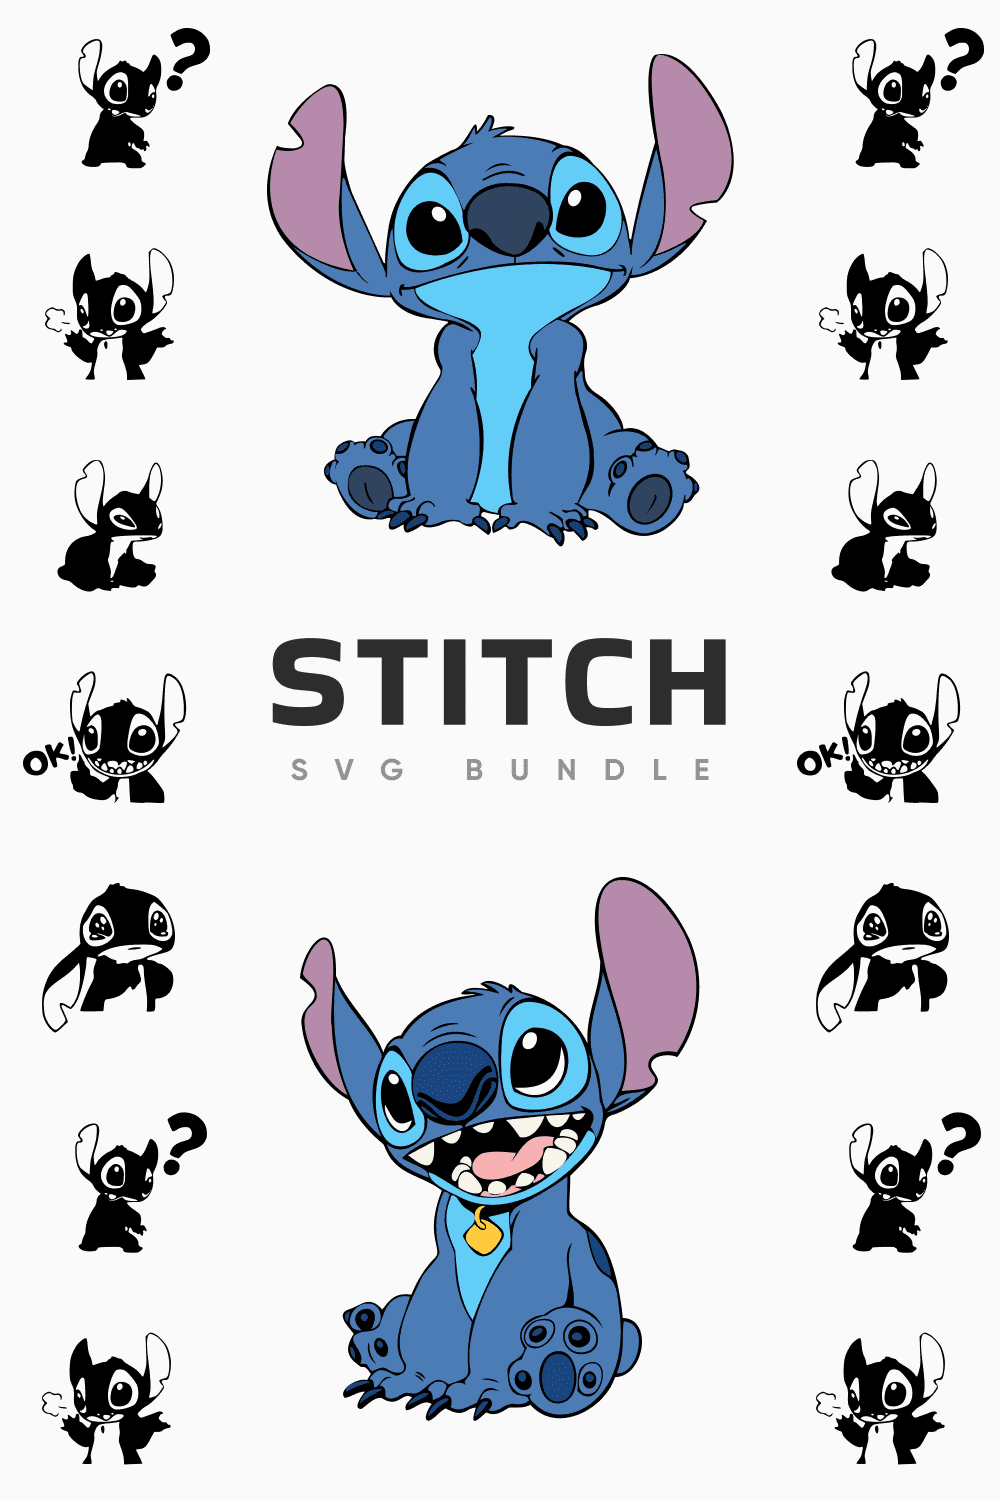 stitch svg collection pinterest image.